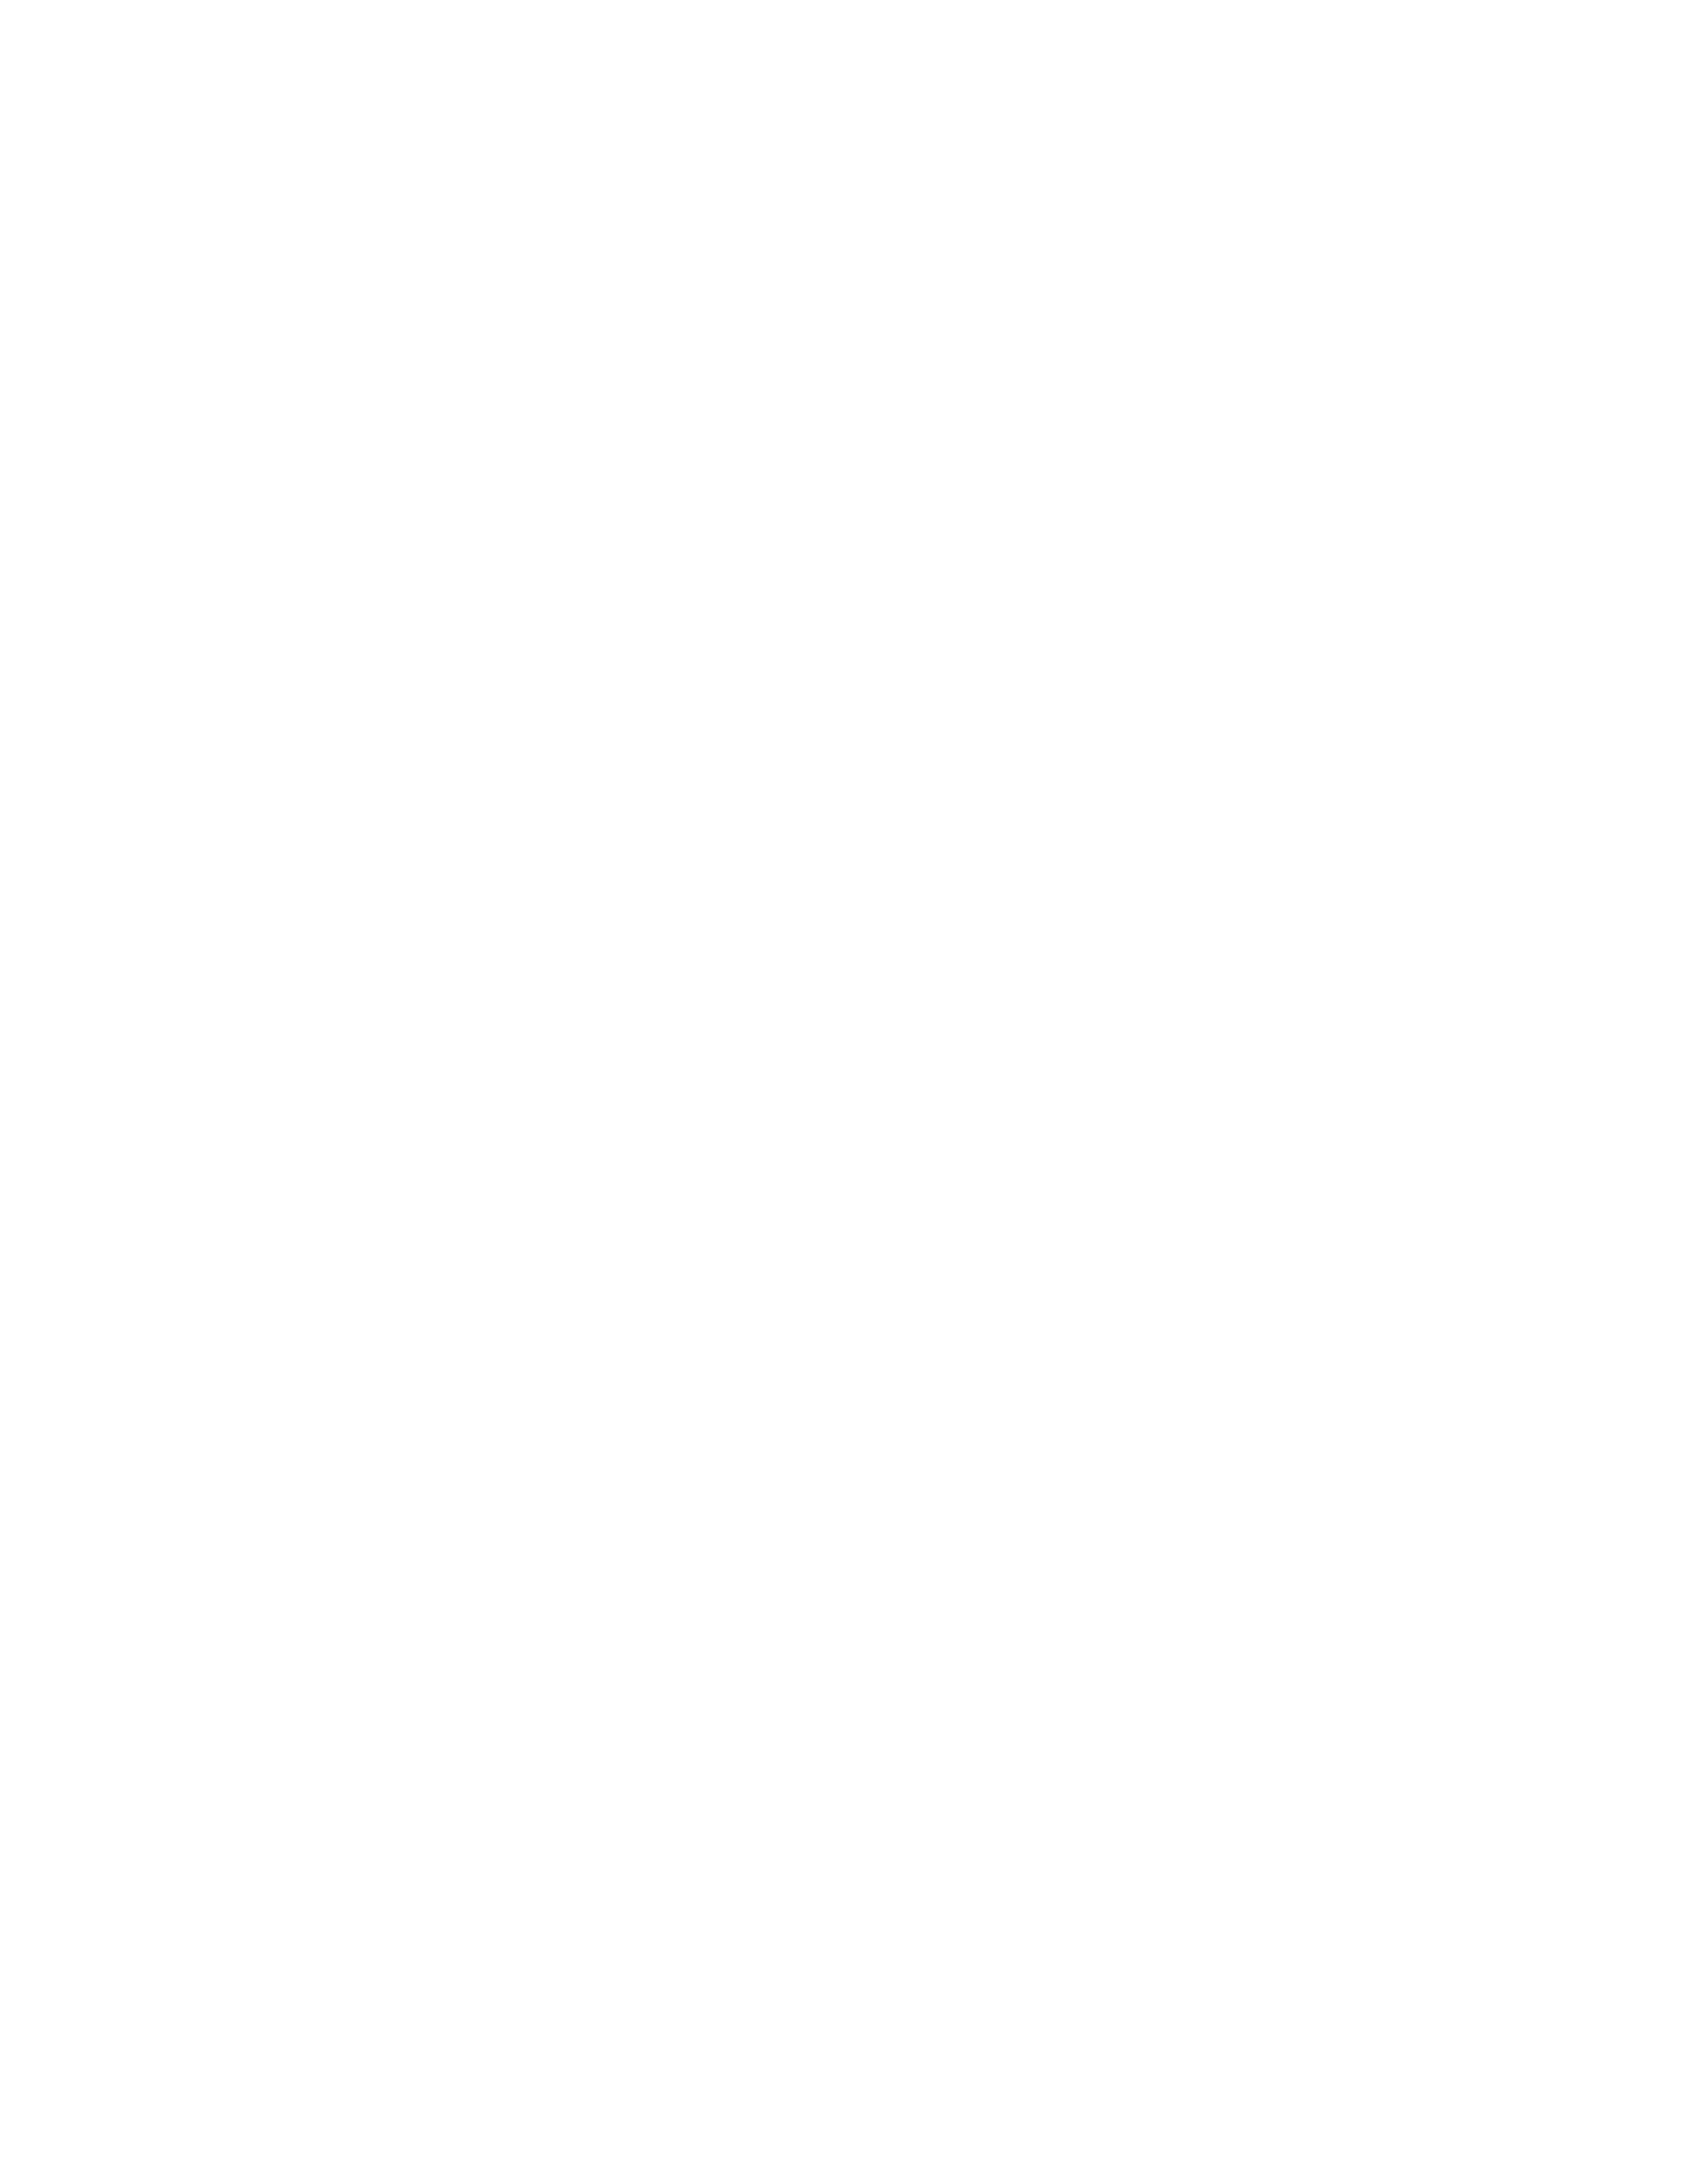 Eco Revolution